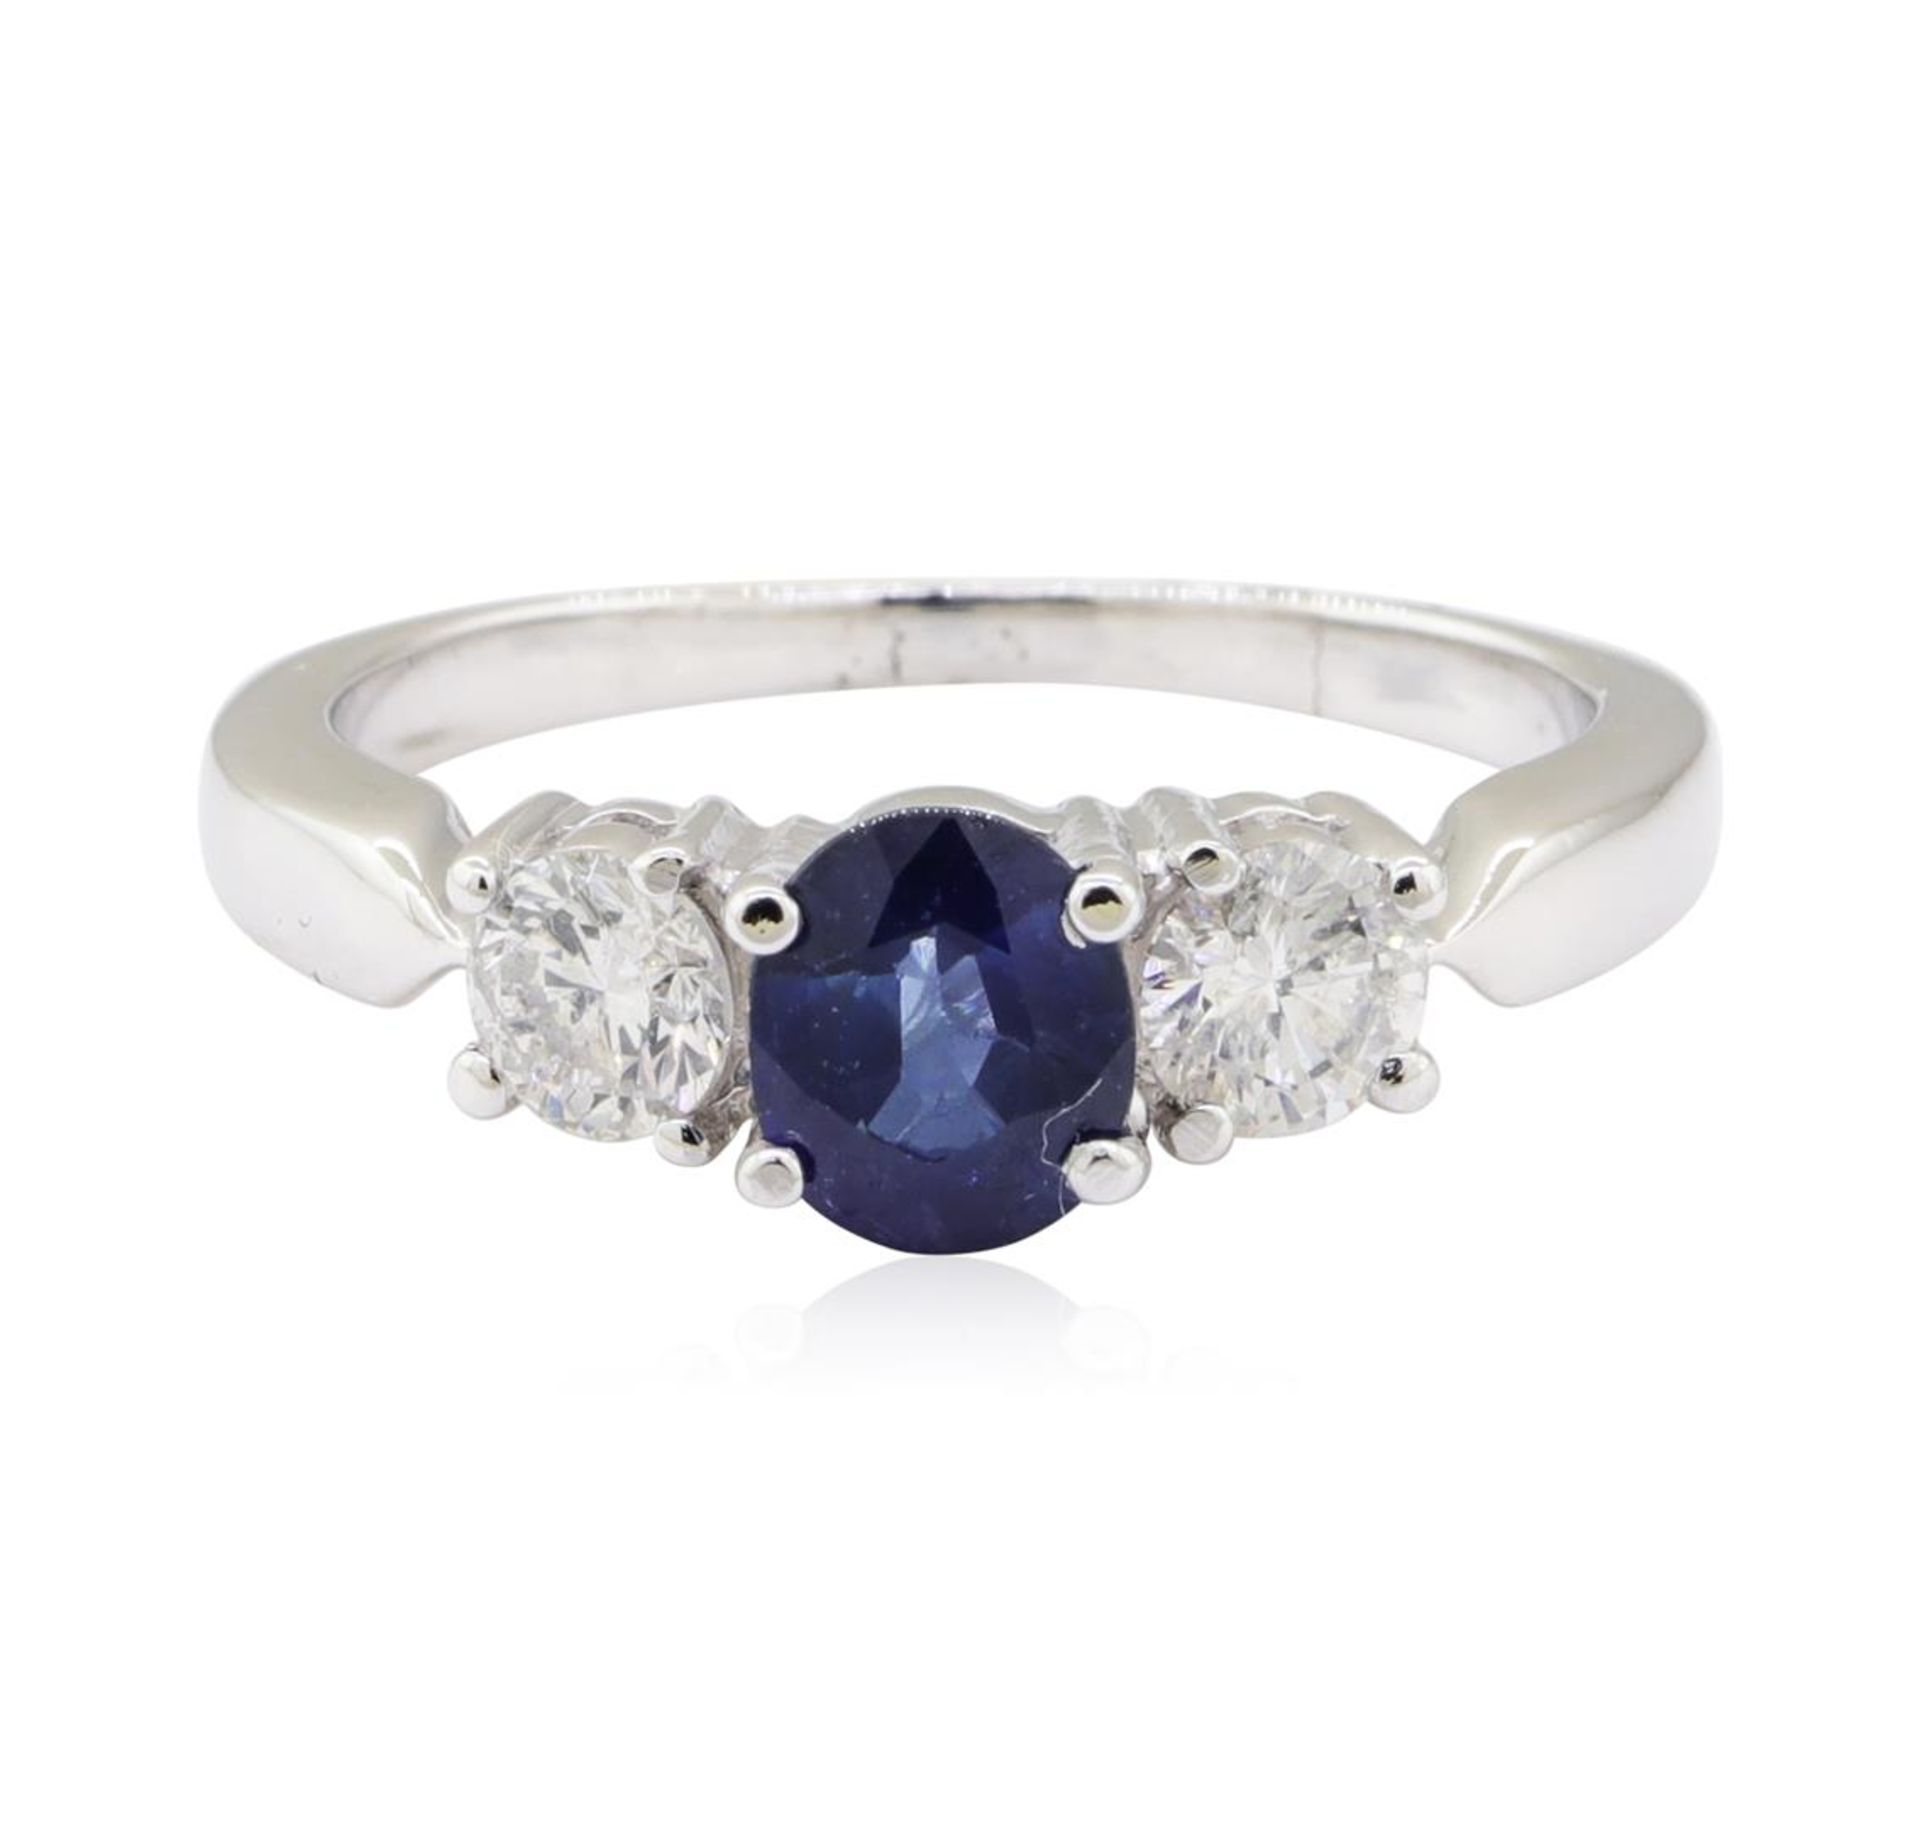 2.01 ctw Sapphire and Diamond Ring - Platinum - Image 2 of 5